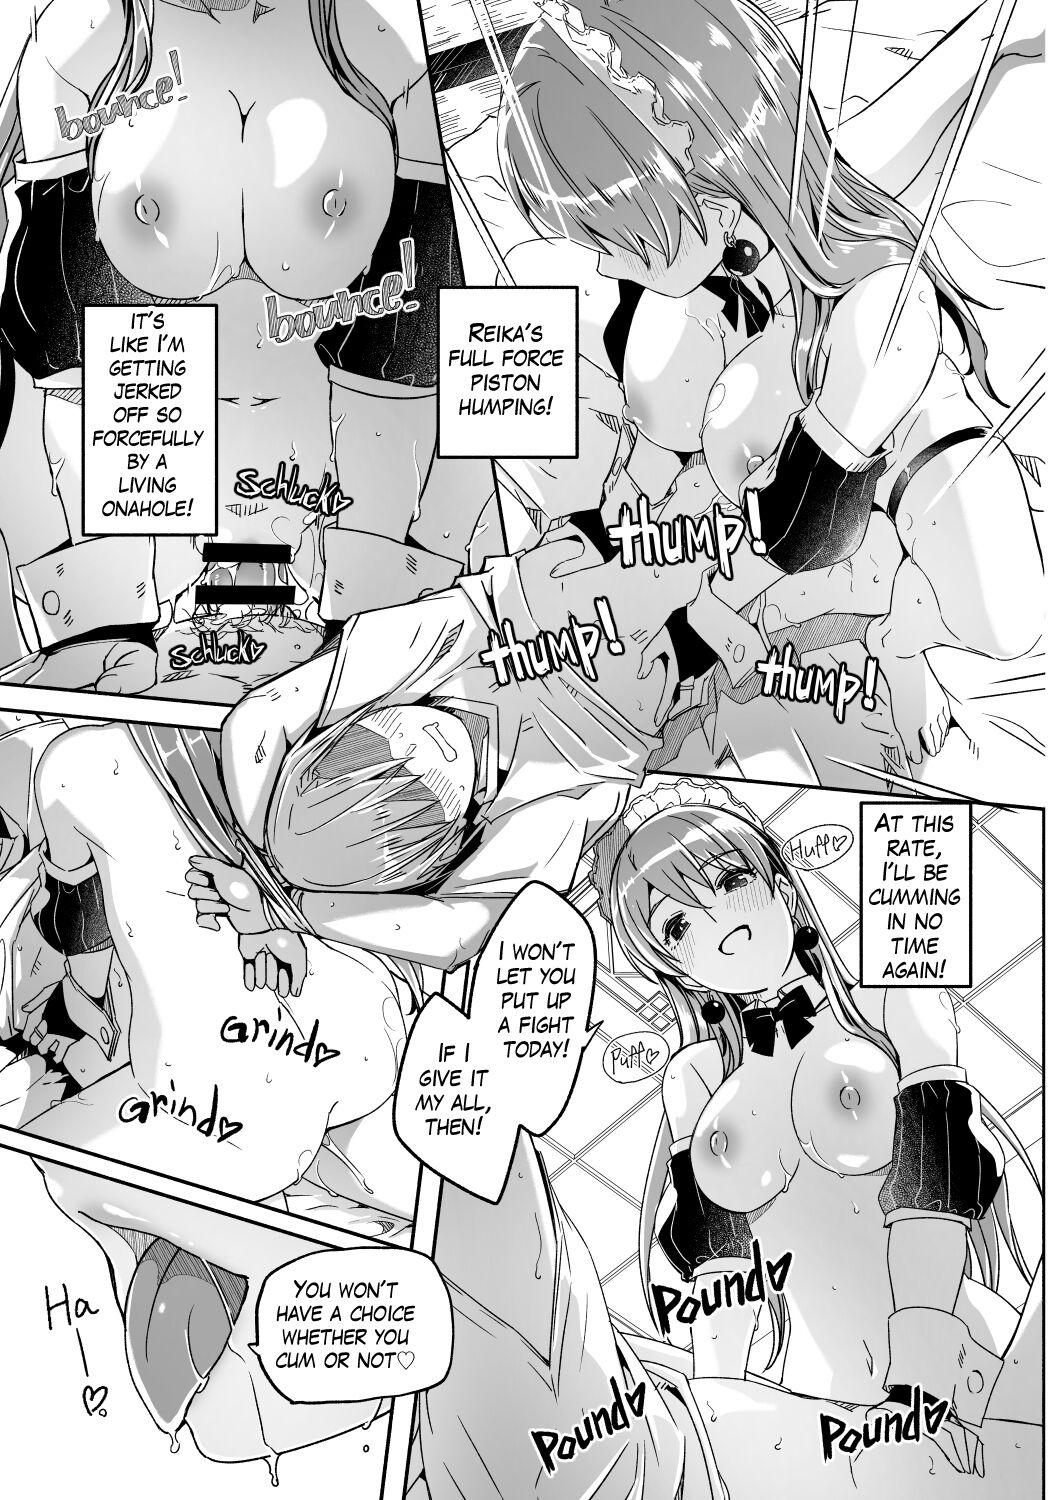 Reika is a my splendid maid #05 28